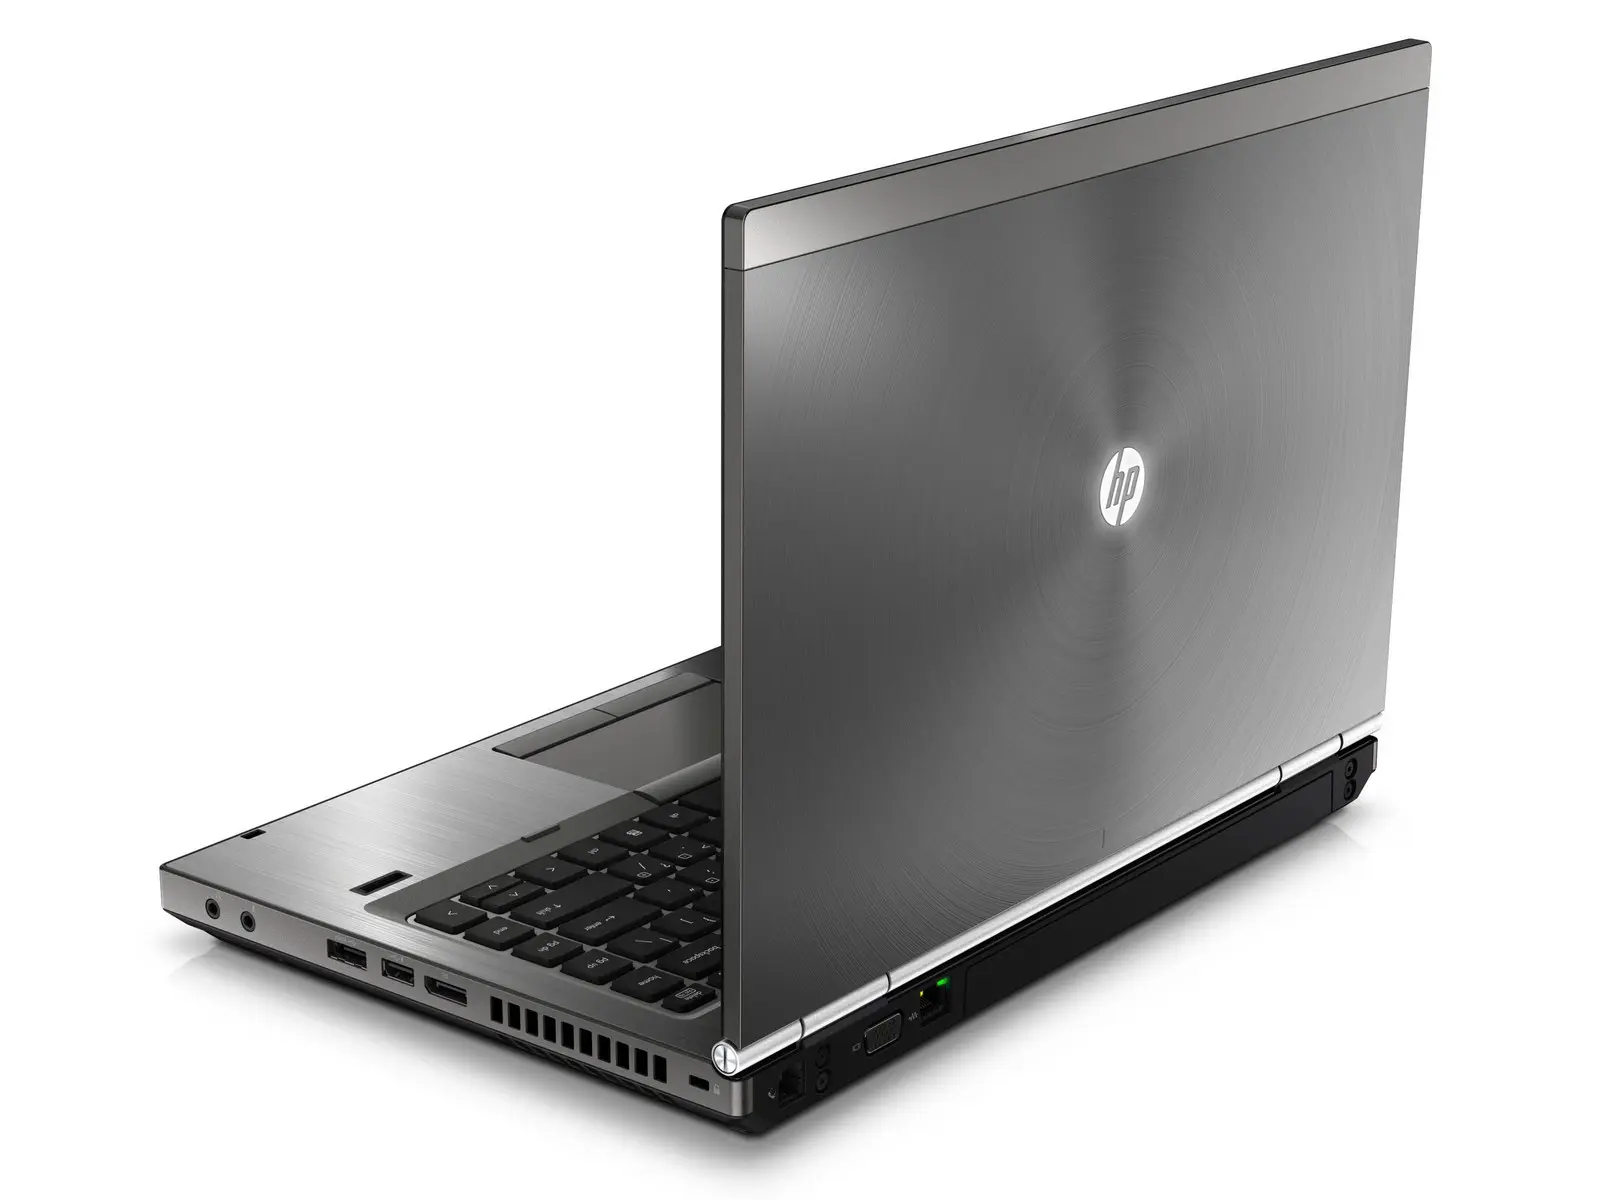 hewlett packard elitebook 8460p review - Is HP EliteBook 8460p a good laptop